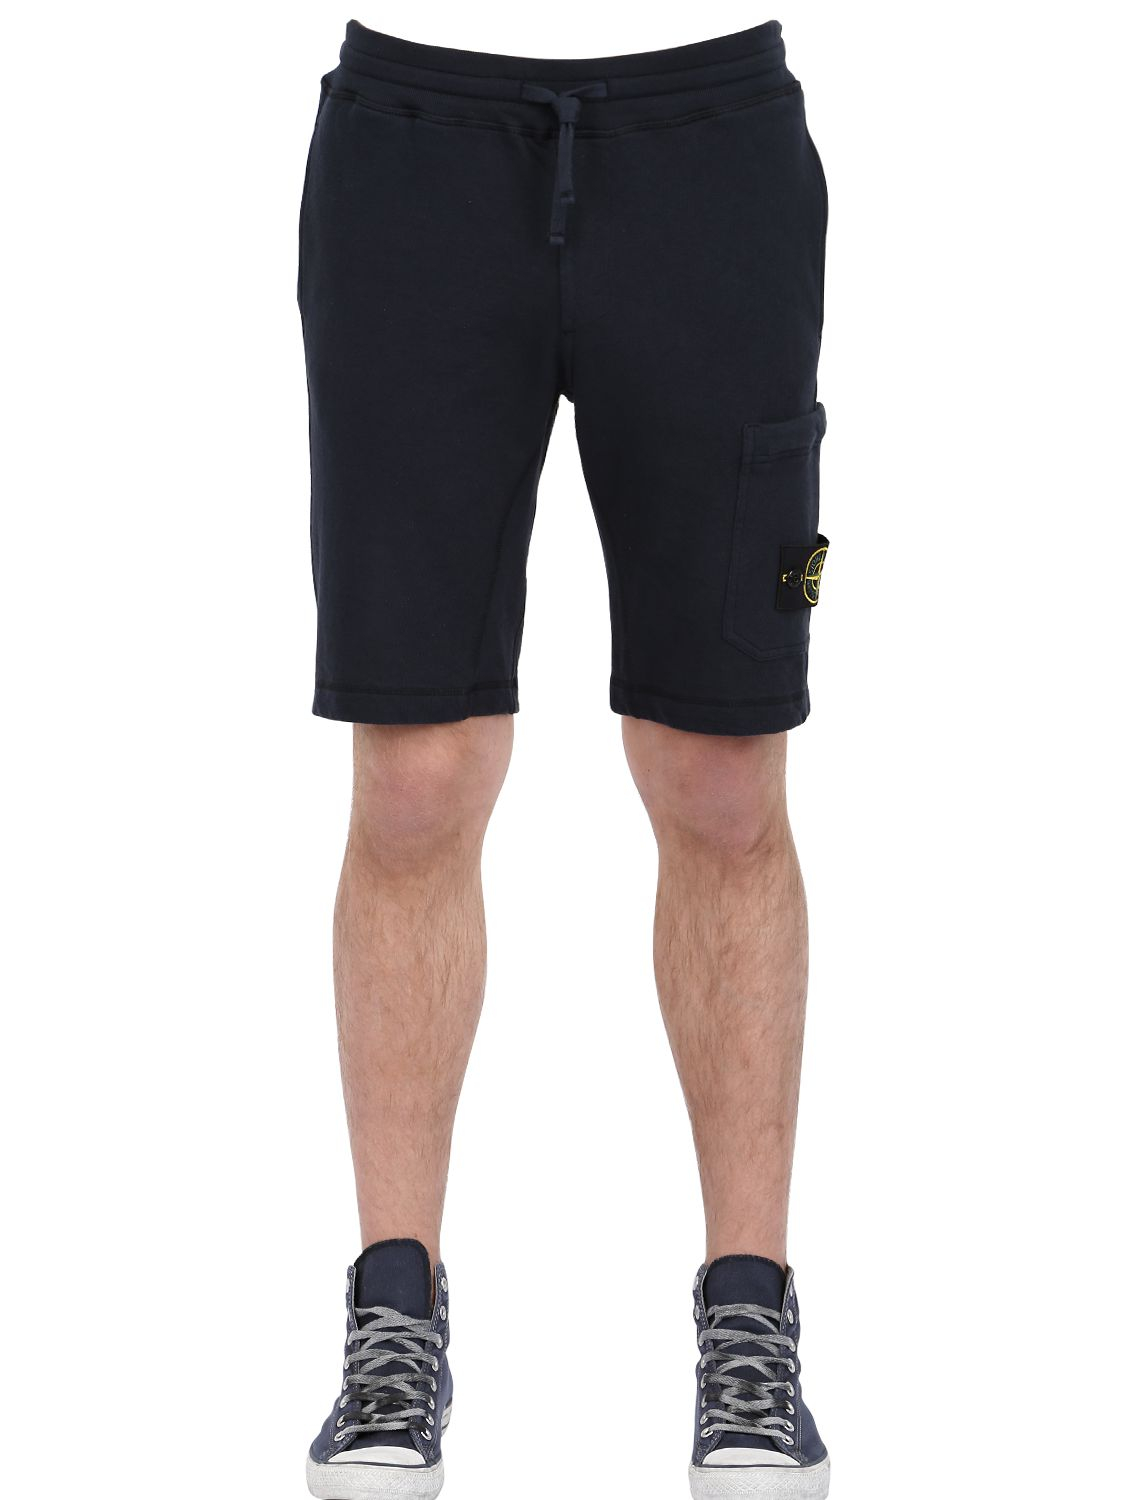 Stone Island Cotton Fleece Shorts in Navy (Blue) for Men - Lyst